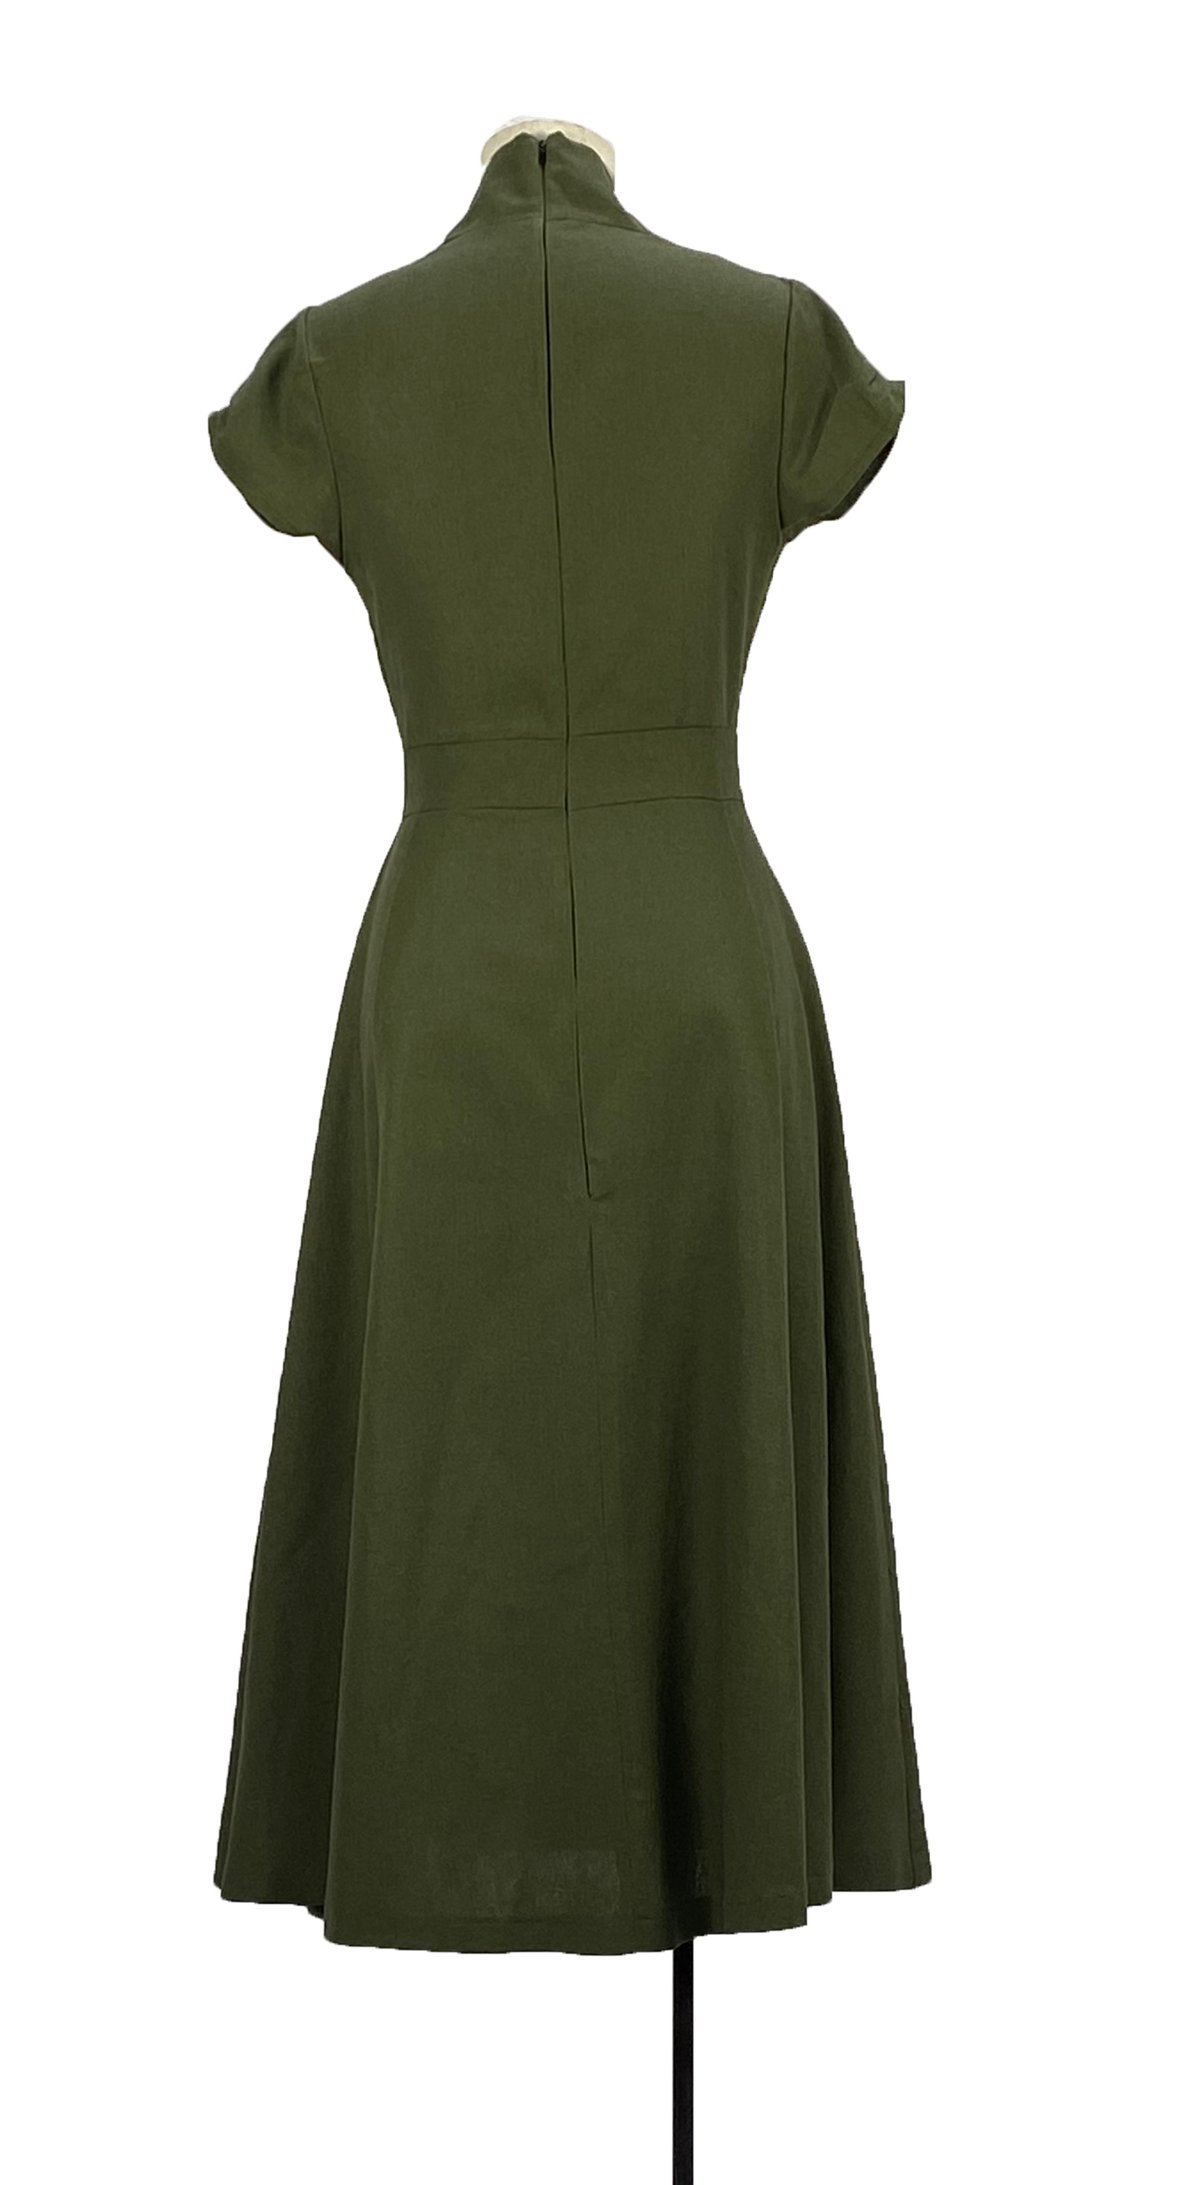 Image of Mona van Suess dress in olive